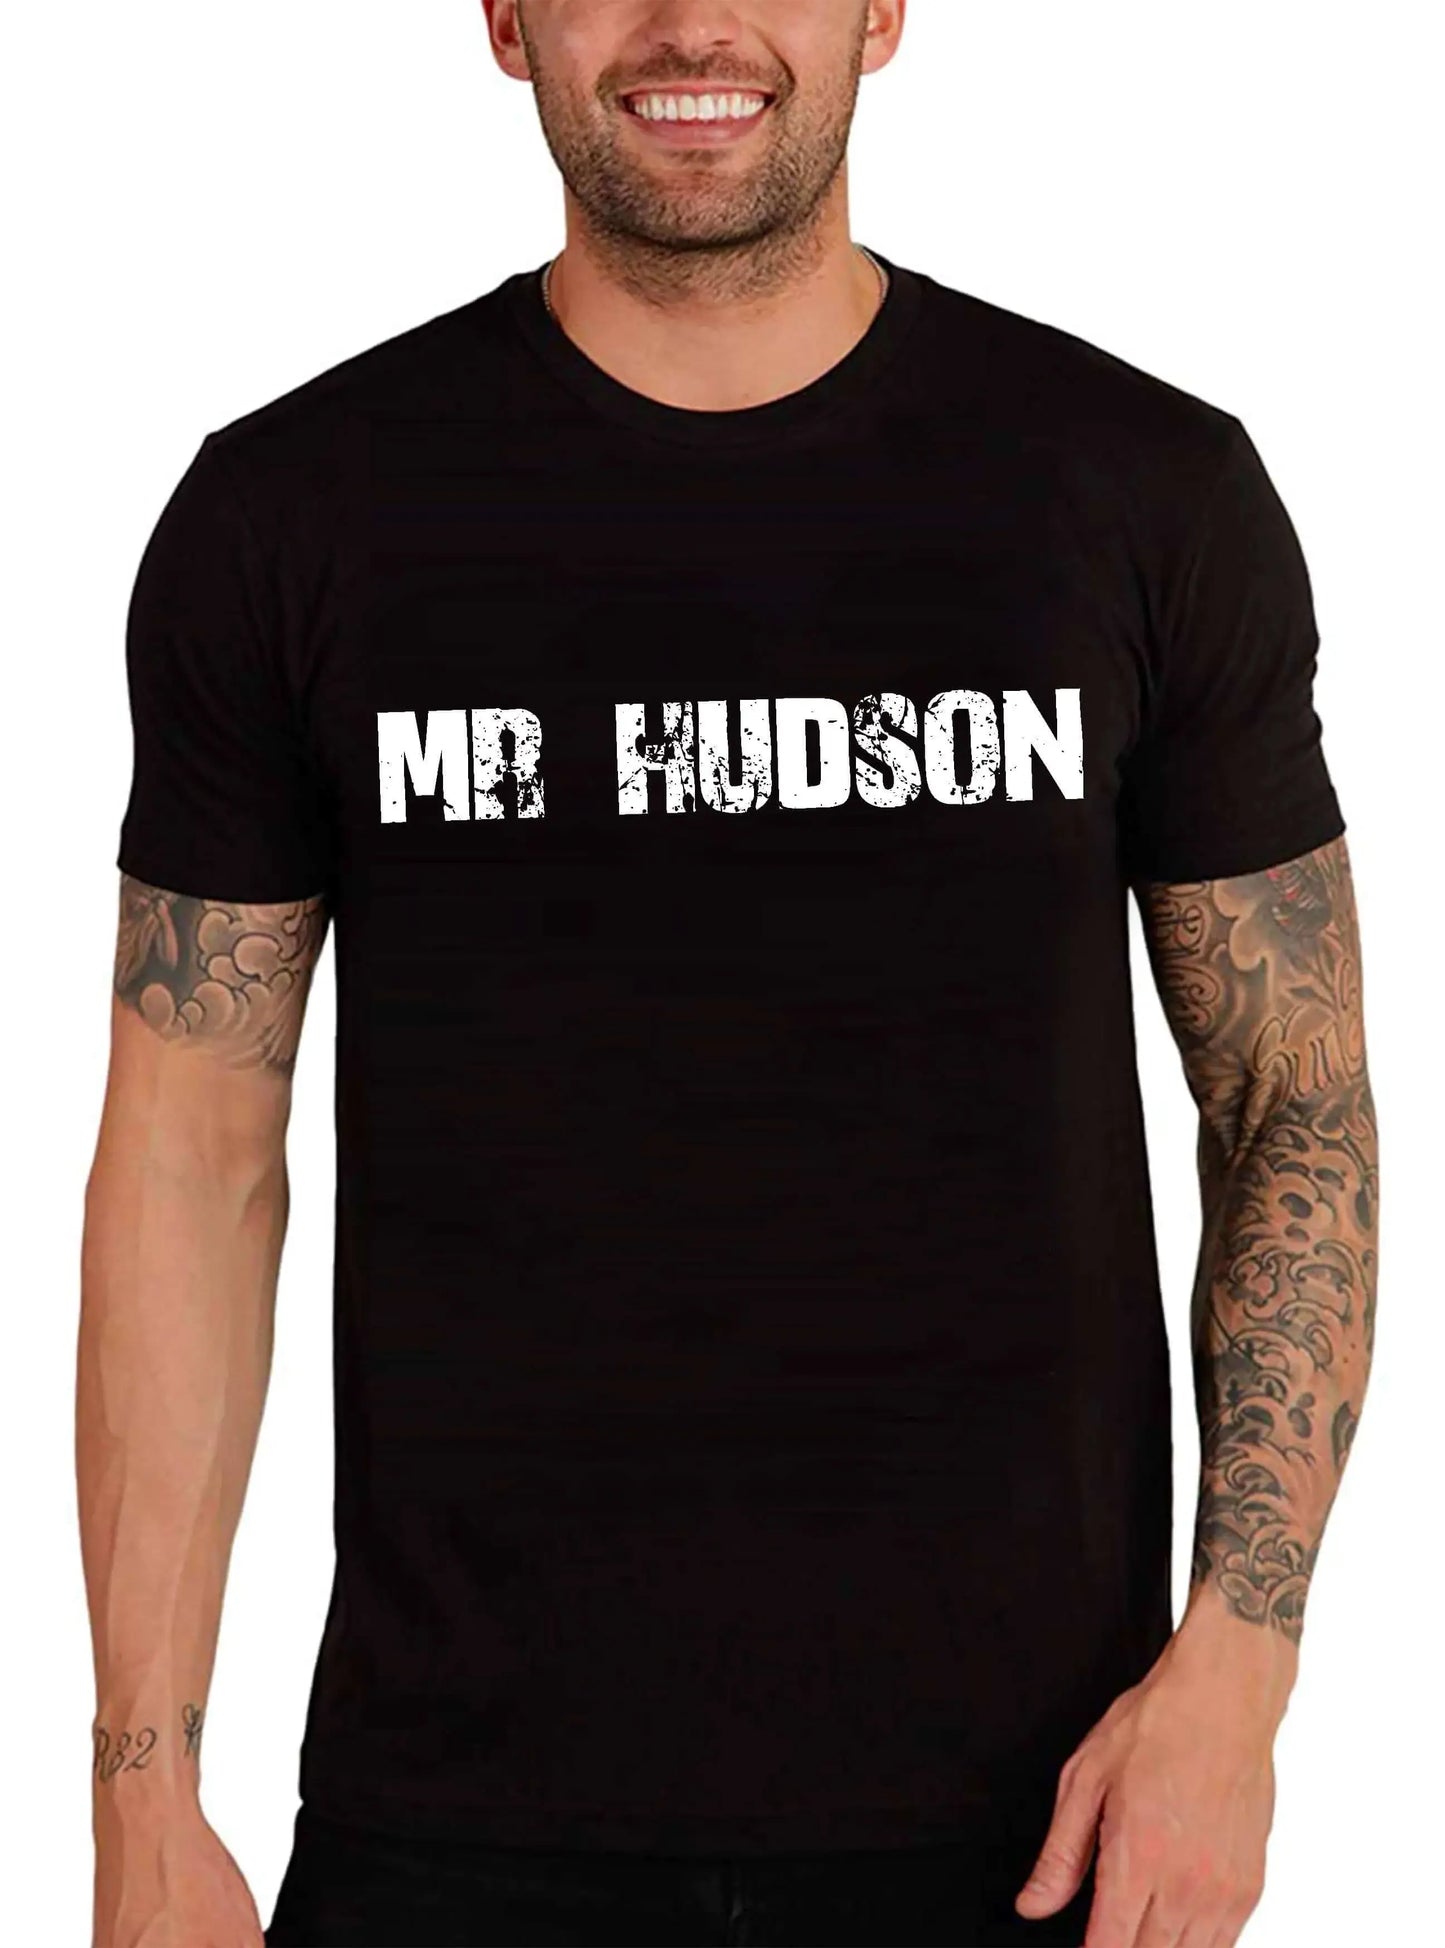 Men's Graphic T-Shirt Mr Hudson Eco-Friendly Limited Edition Short Sleeve Tee-Shirt Vintage Birthday Gift Novelty